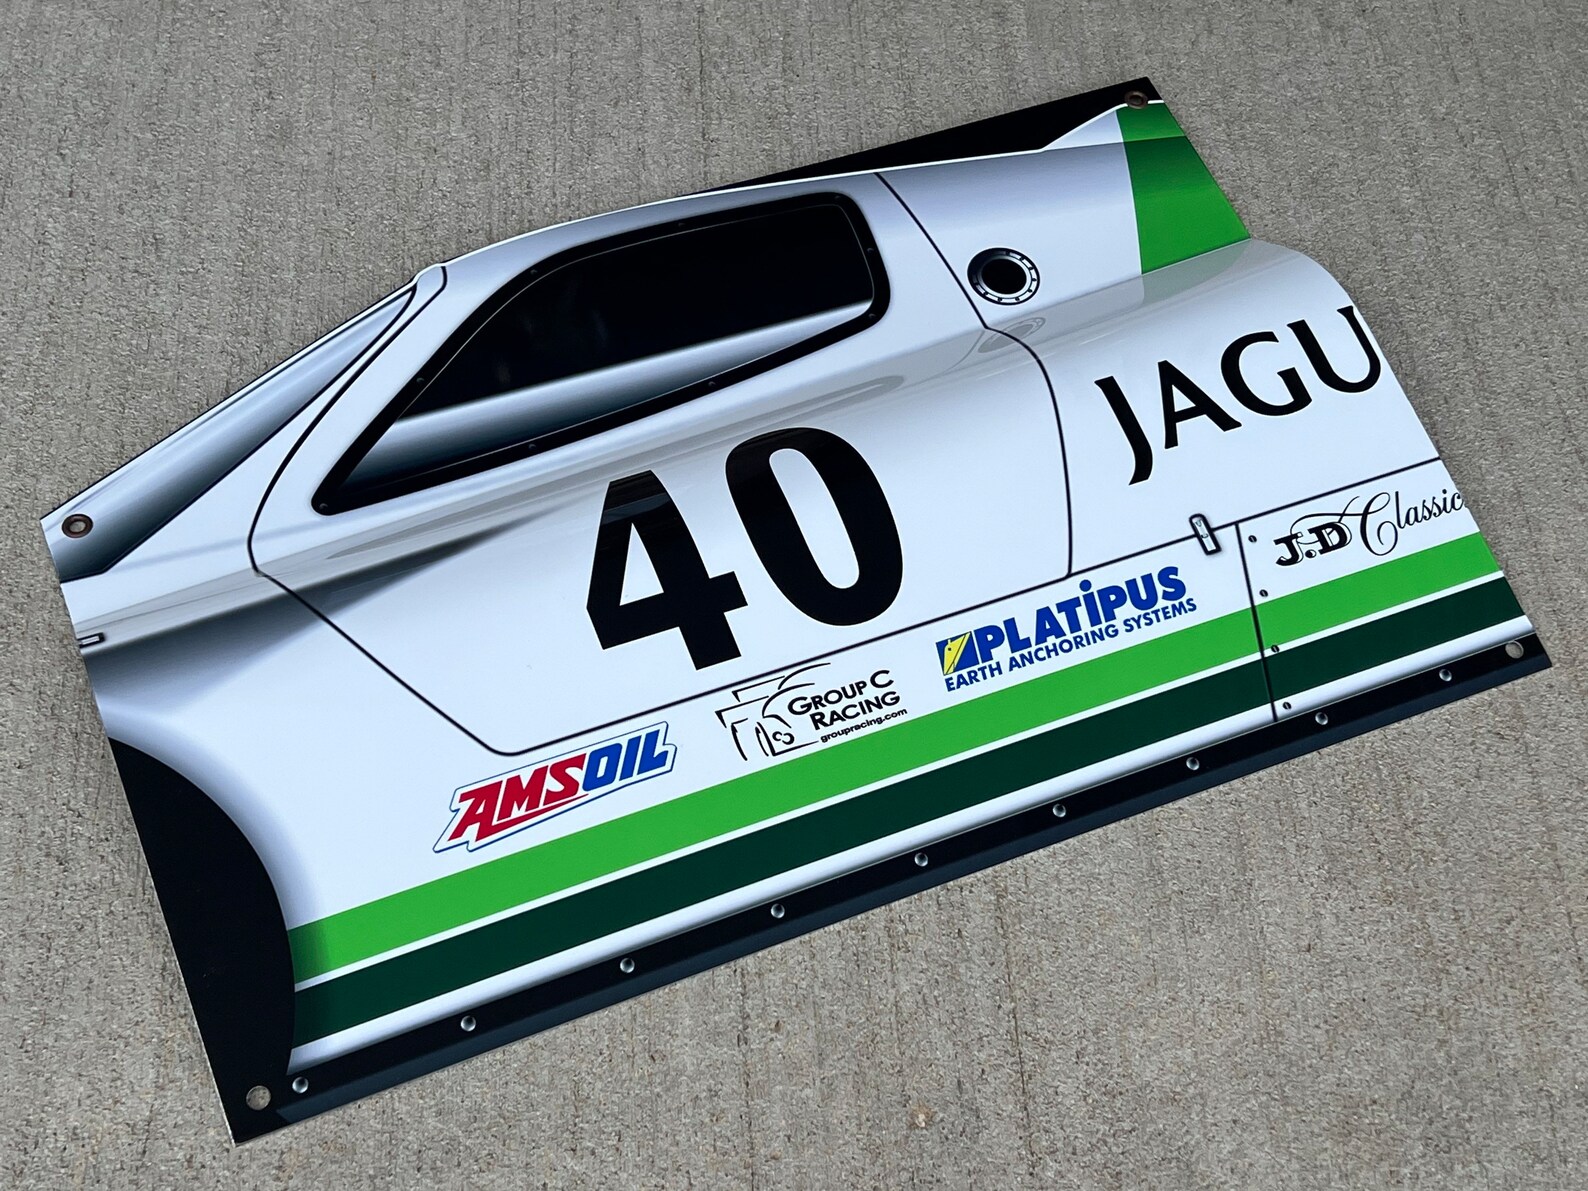 Jaguar XJR9 Garage Display - Image 3 of 3